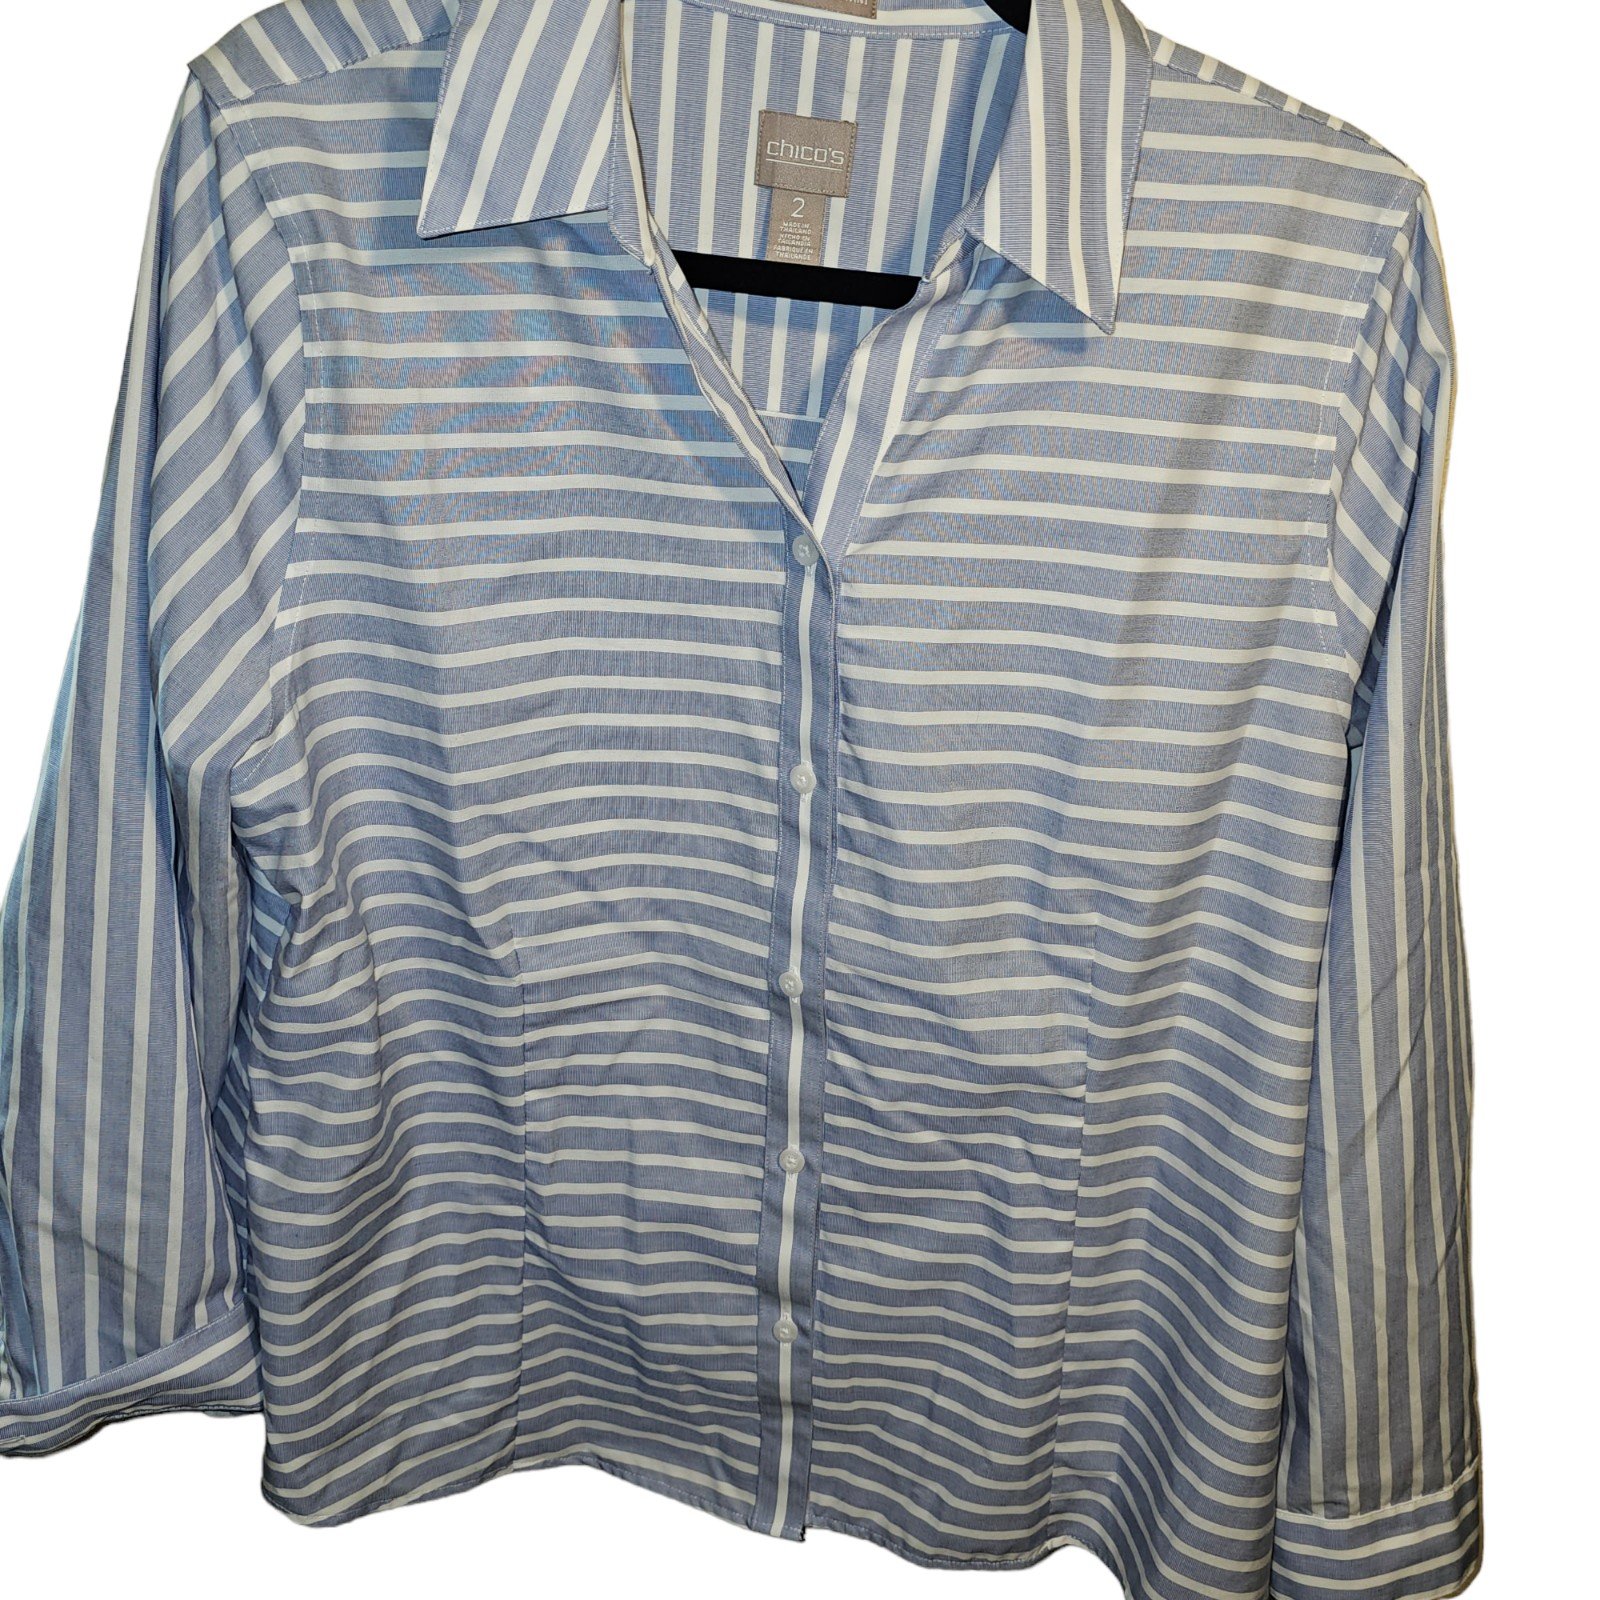 good price Chicos sz. Large blue/white stripe blouse N8